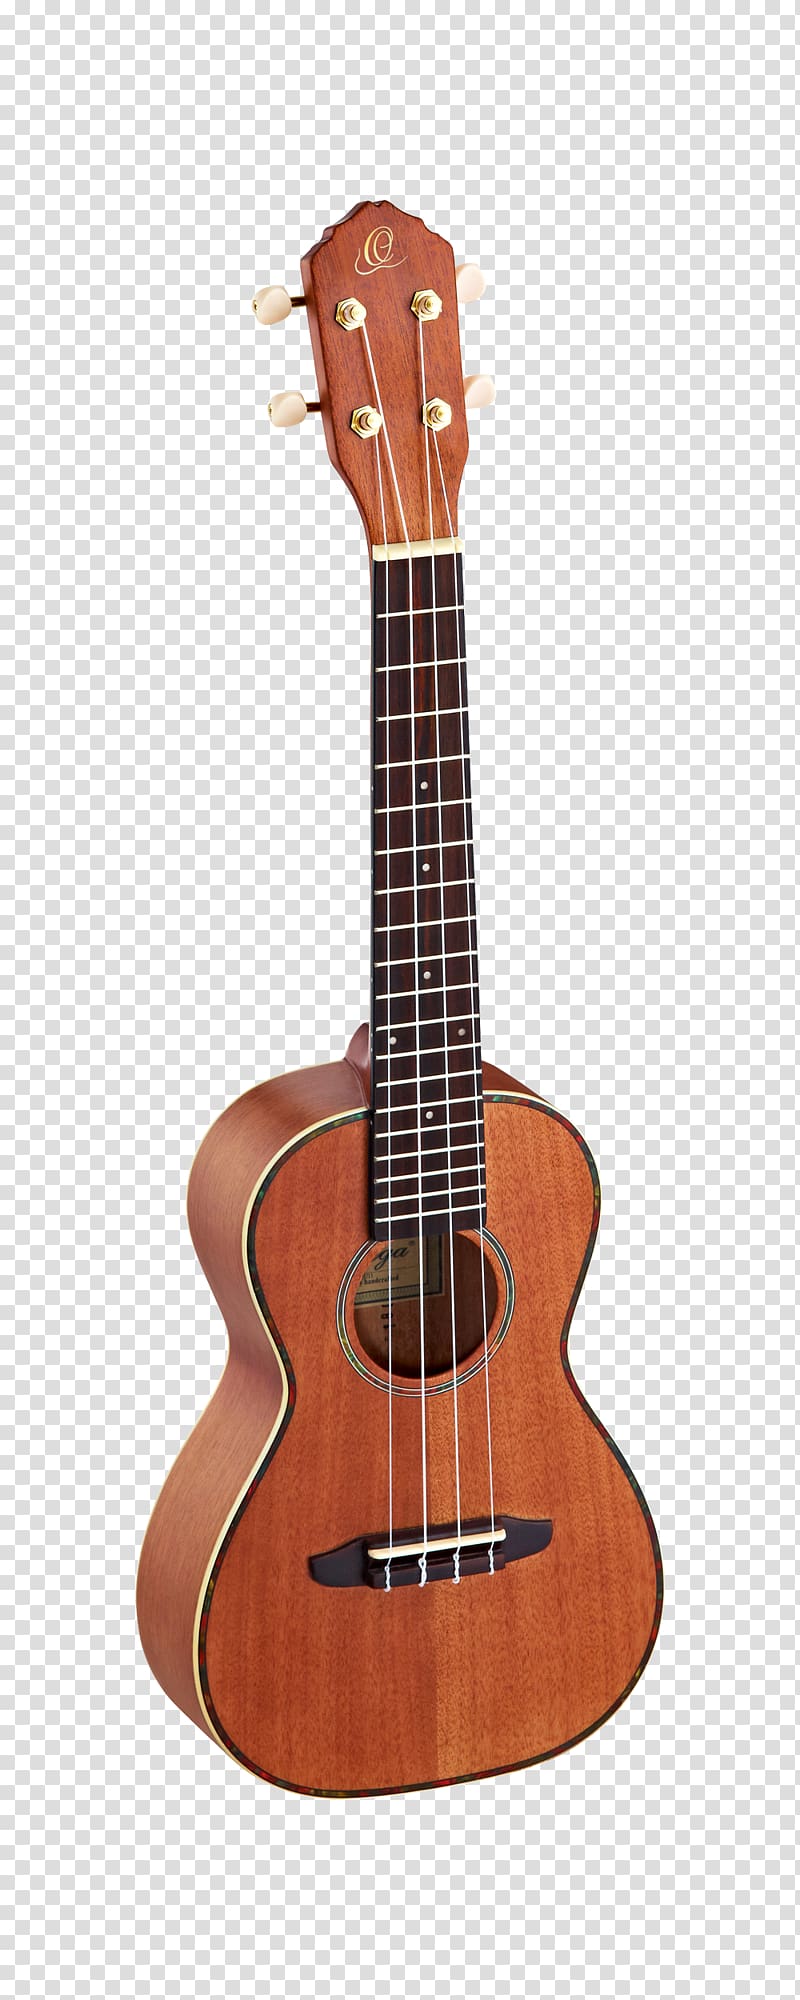 Ukulele Steel-string acoustic guitar Musical Instruments Electric guitar, amancio ortega transparent background PNG clipart